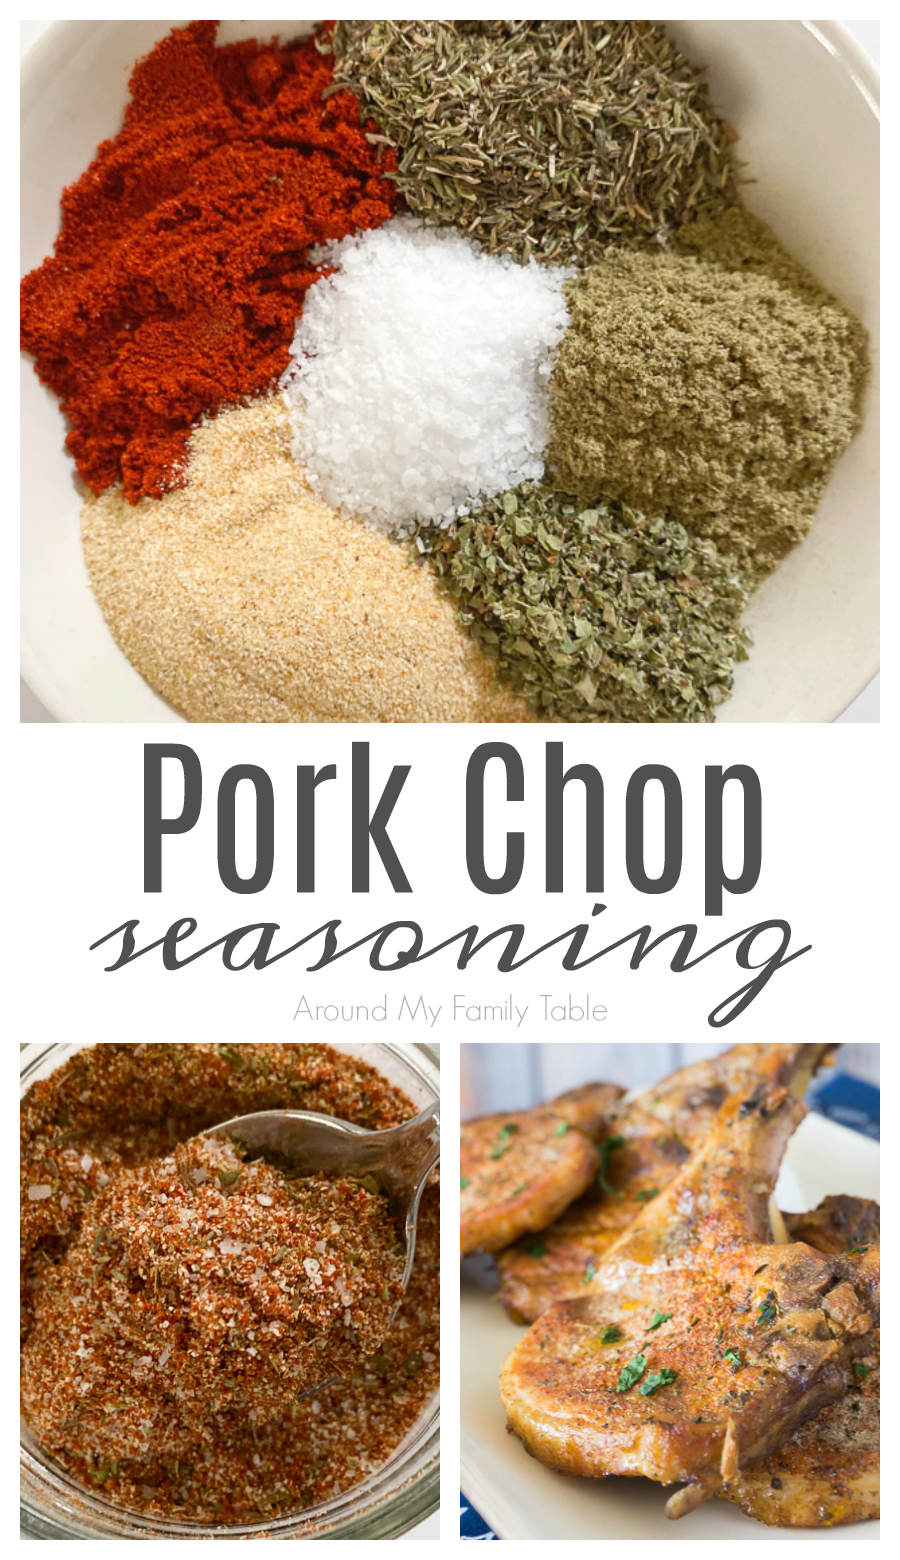 Pork Chop Seasoning [Simple Dry Rub for Grilling]